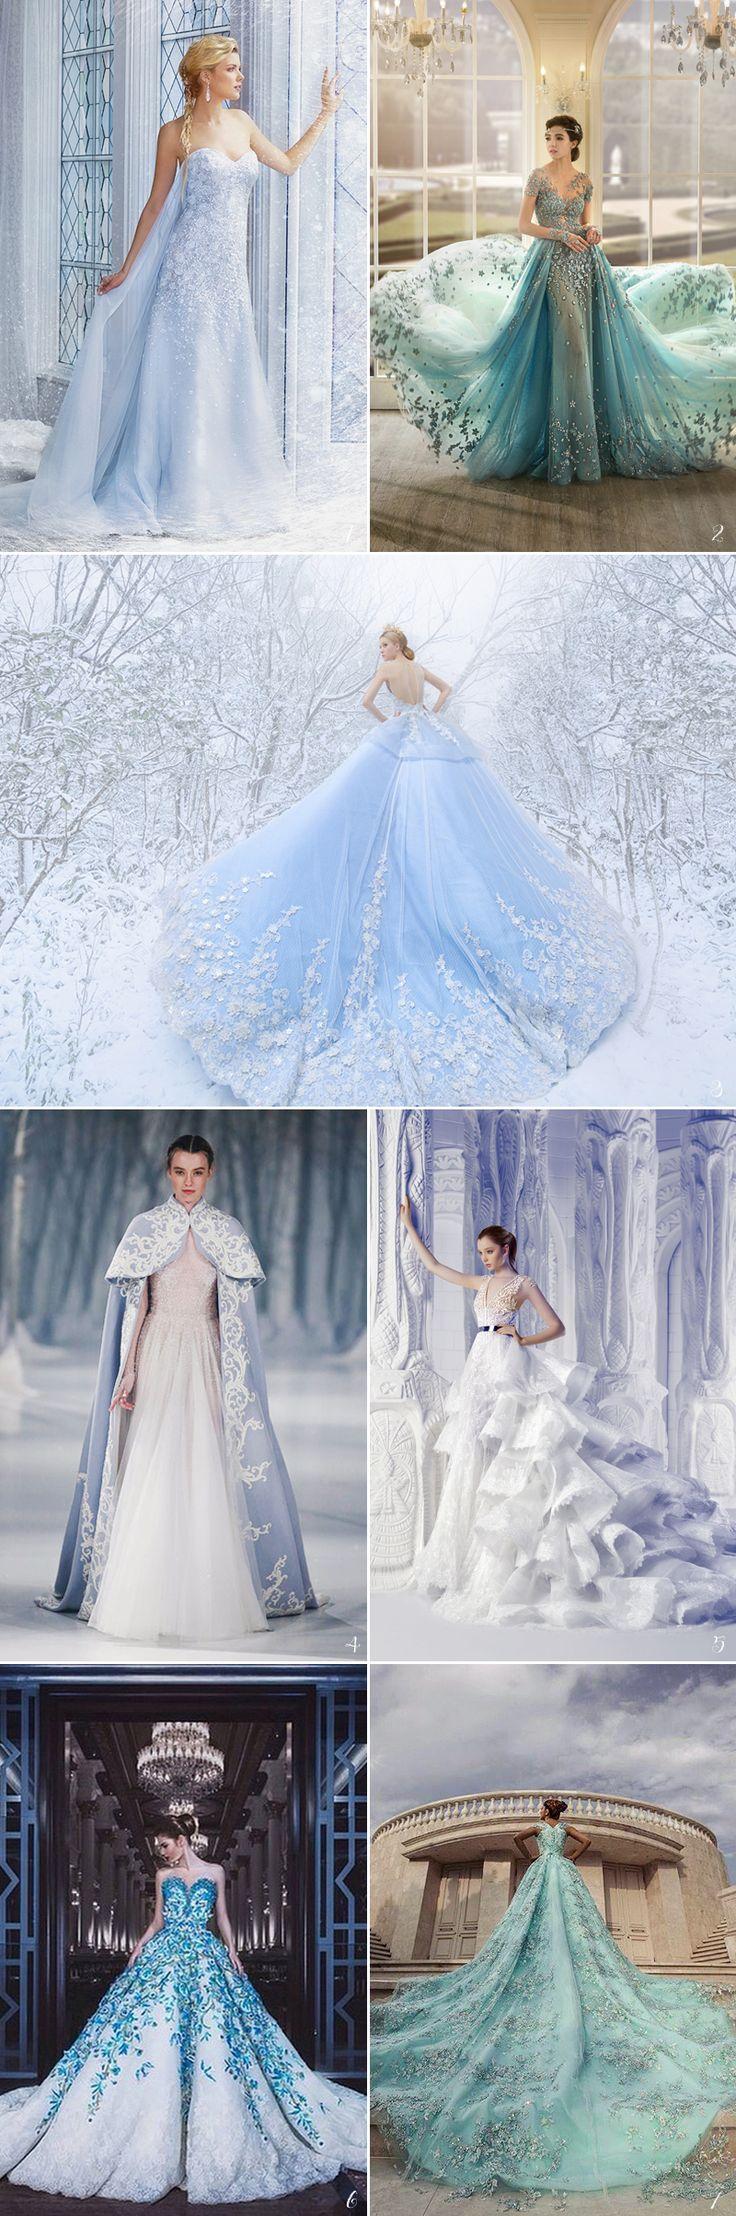 Wedding - 42 Fairy Tale Wedding Dresses For The Disney Princess Bride